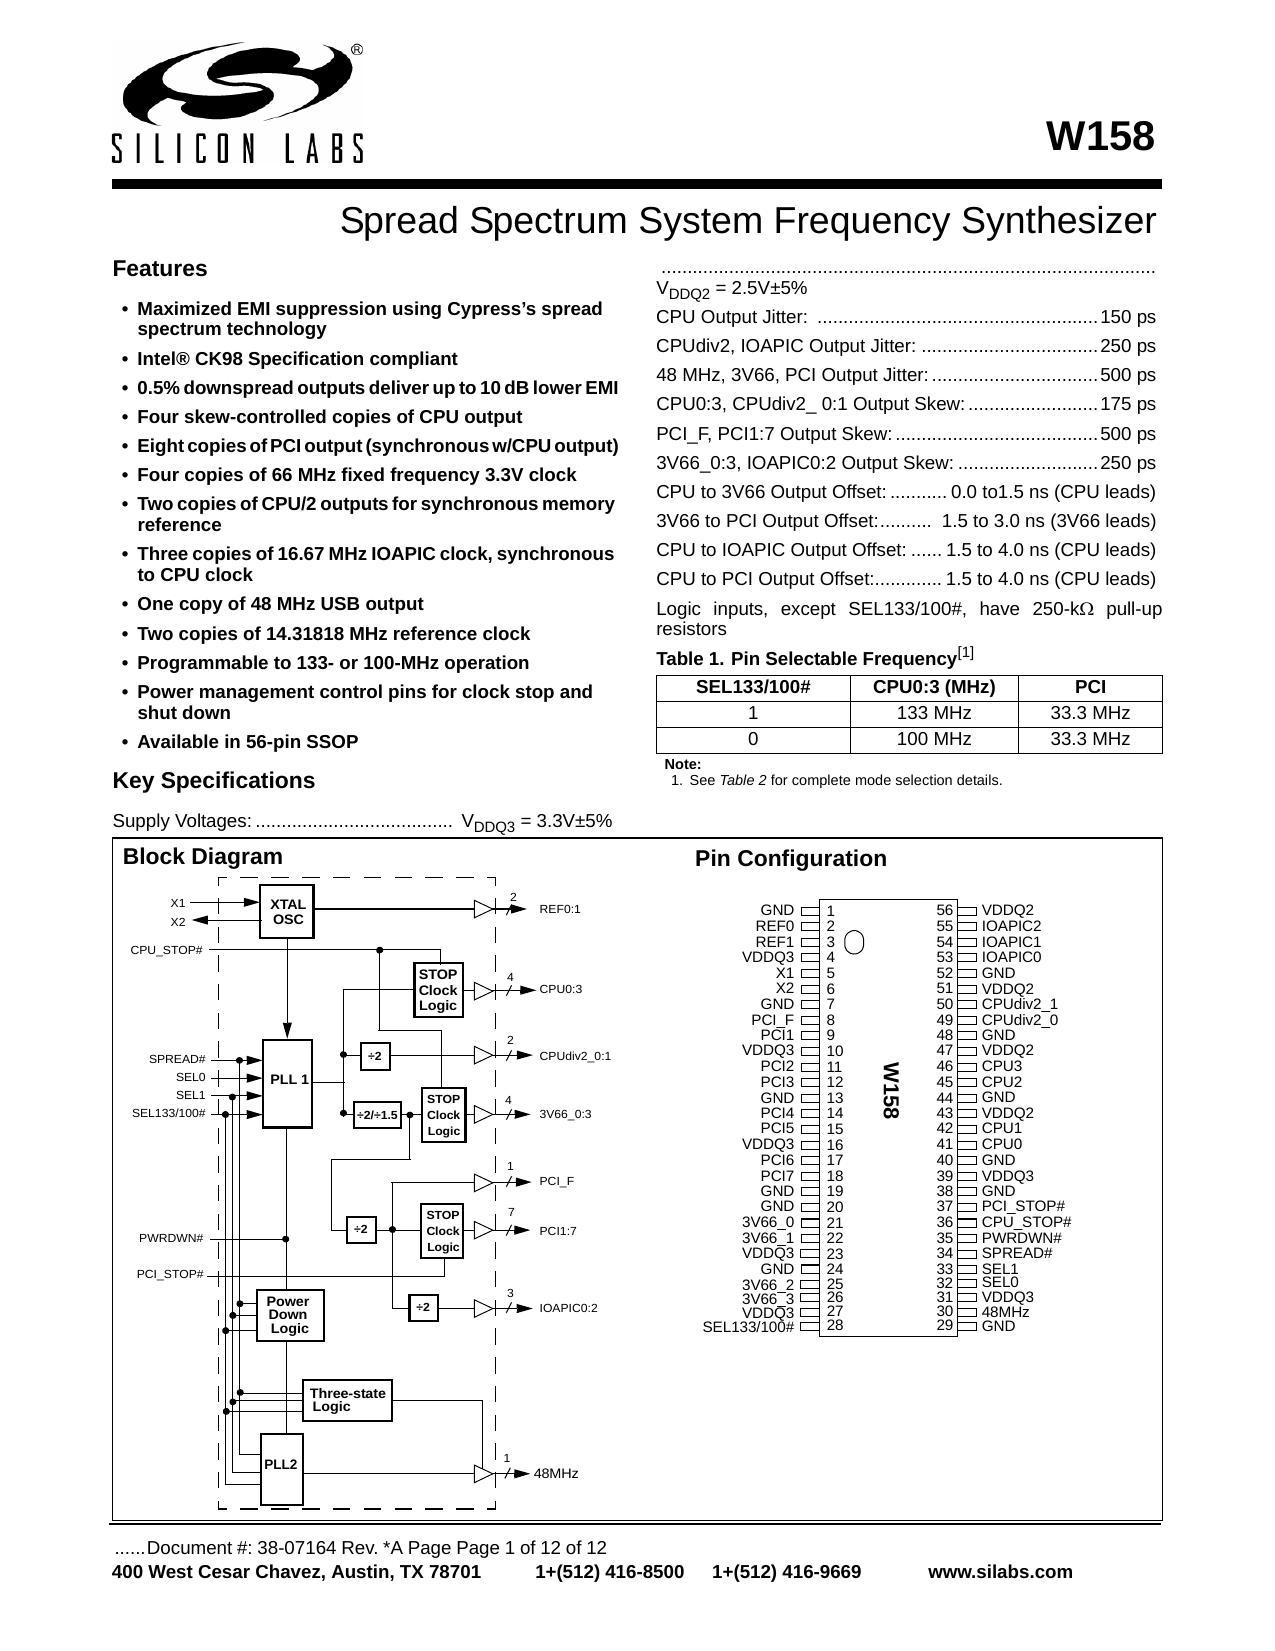 w158-spread-spectrum-system-frequency-synthesizer.pdf